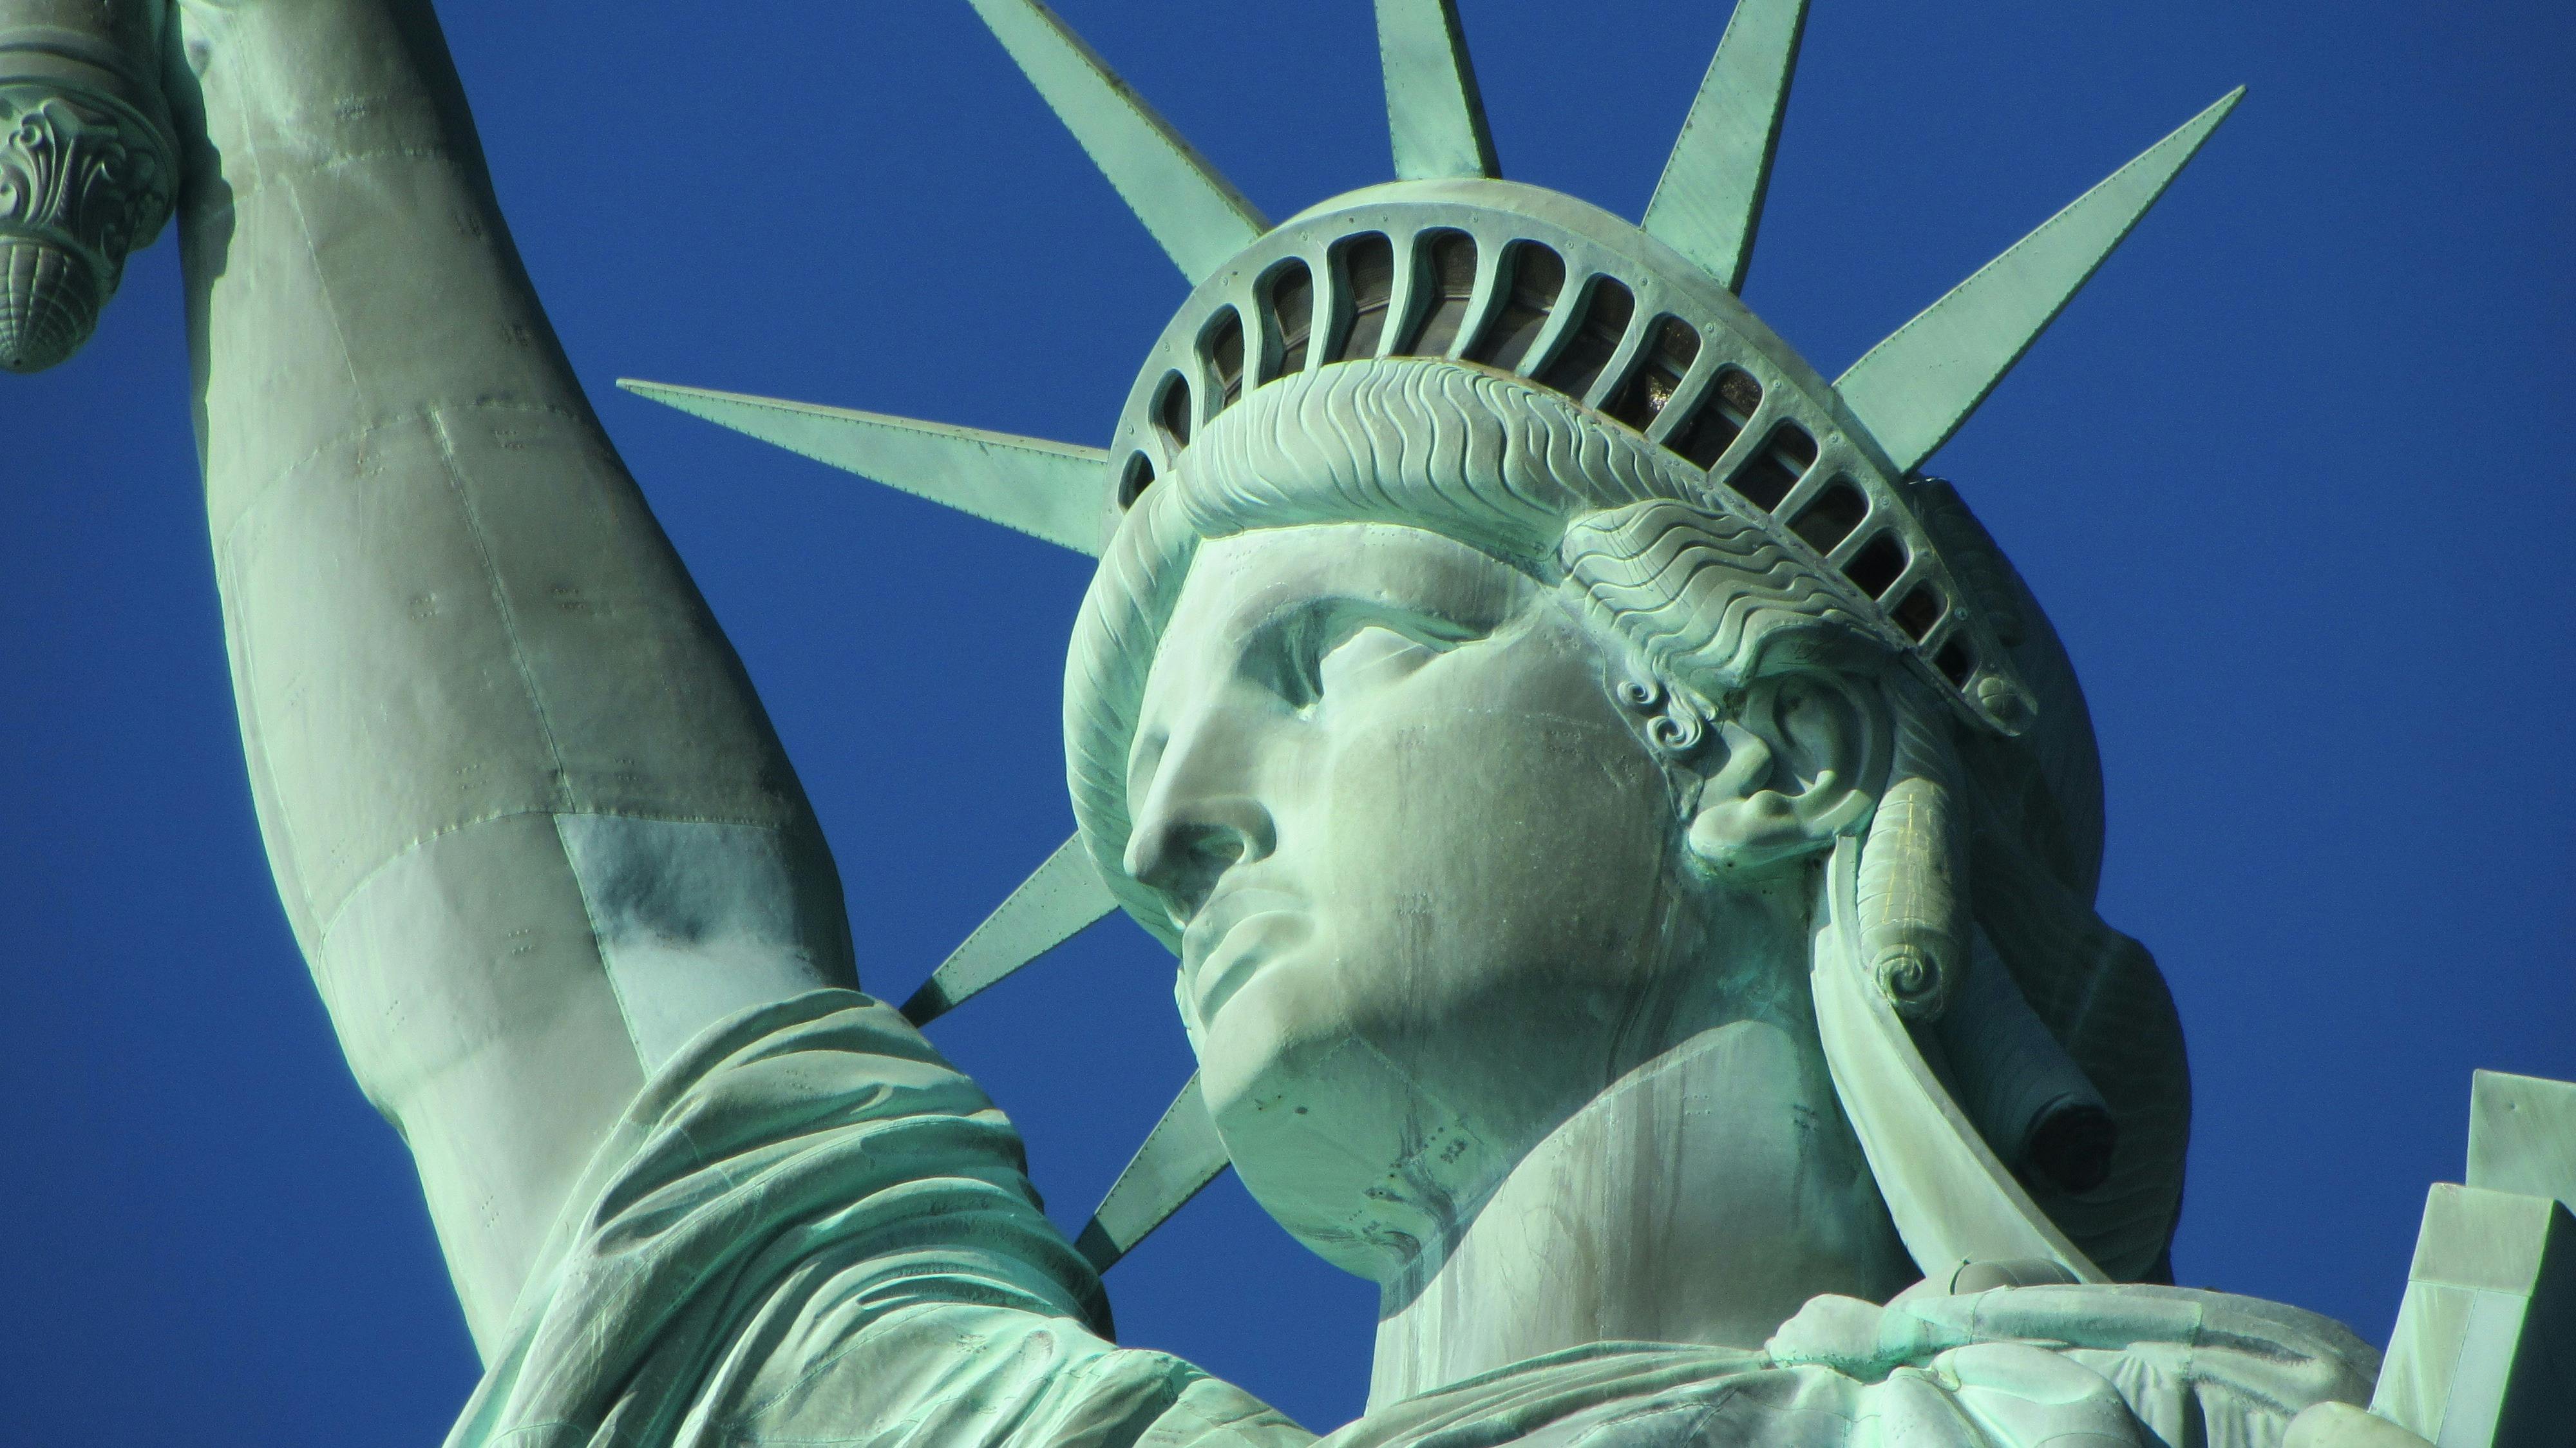 statue-of-liberty-new-york-ny-nyc-60121.jpeg